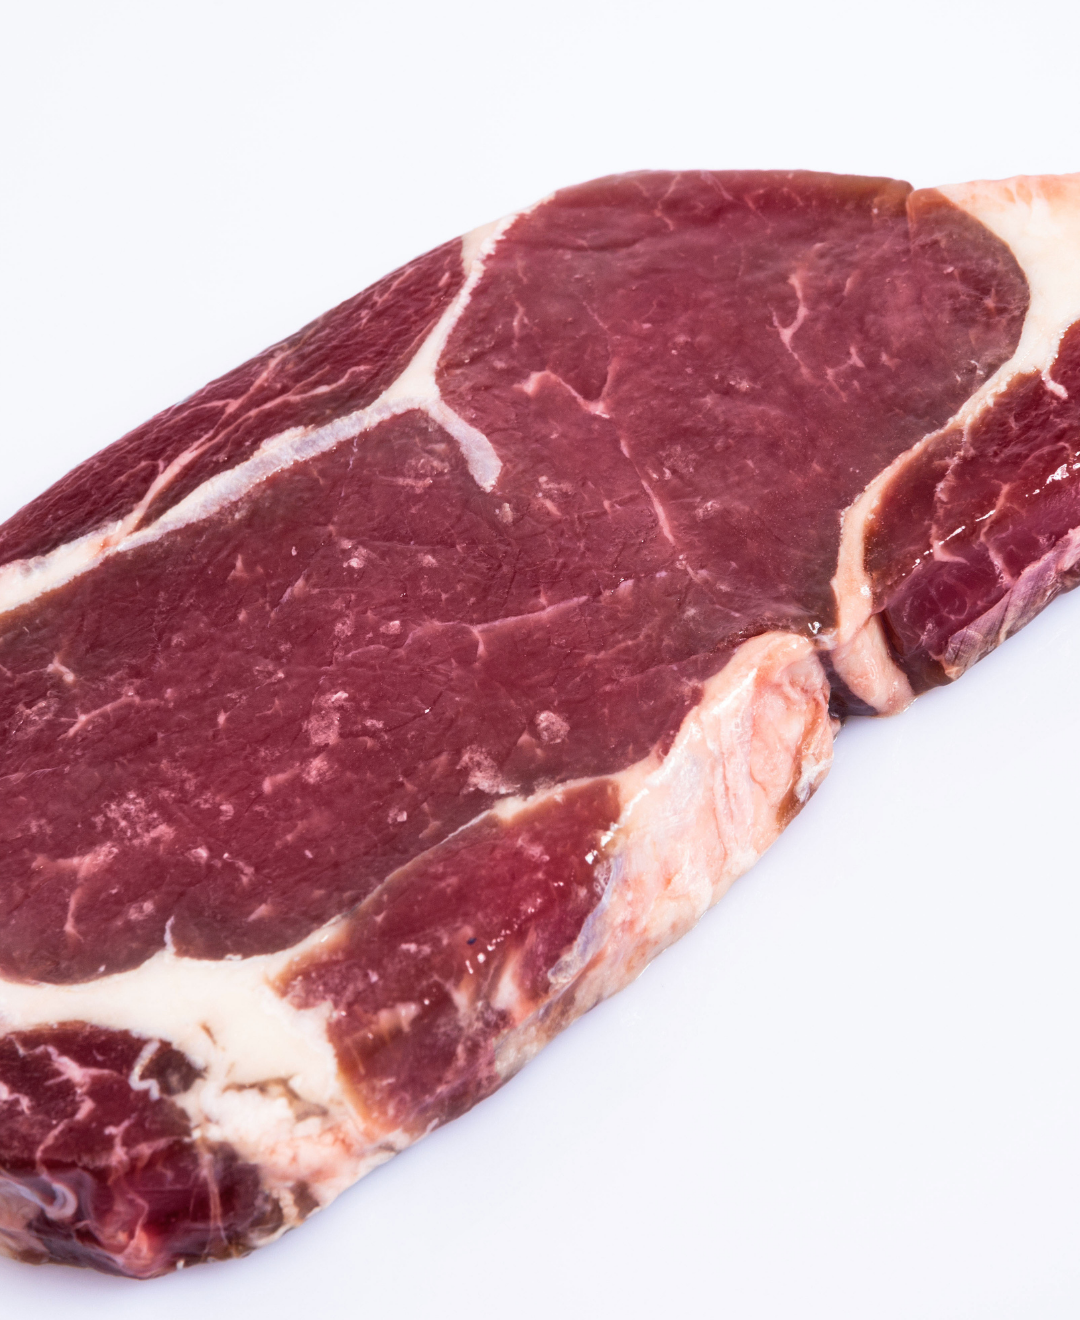 USDA Ribeye Butter-Aged Steak 1 kg (1" per cut, 3 slices)